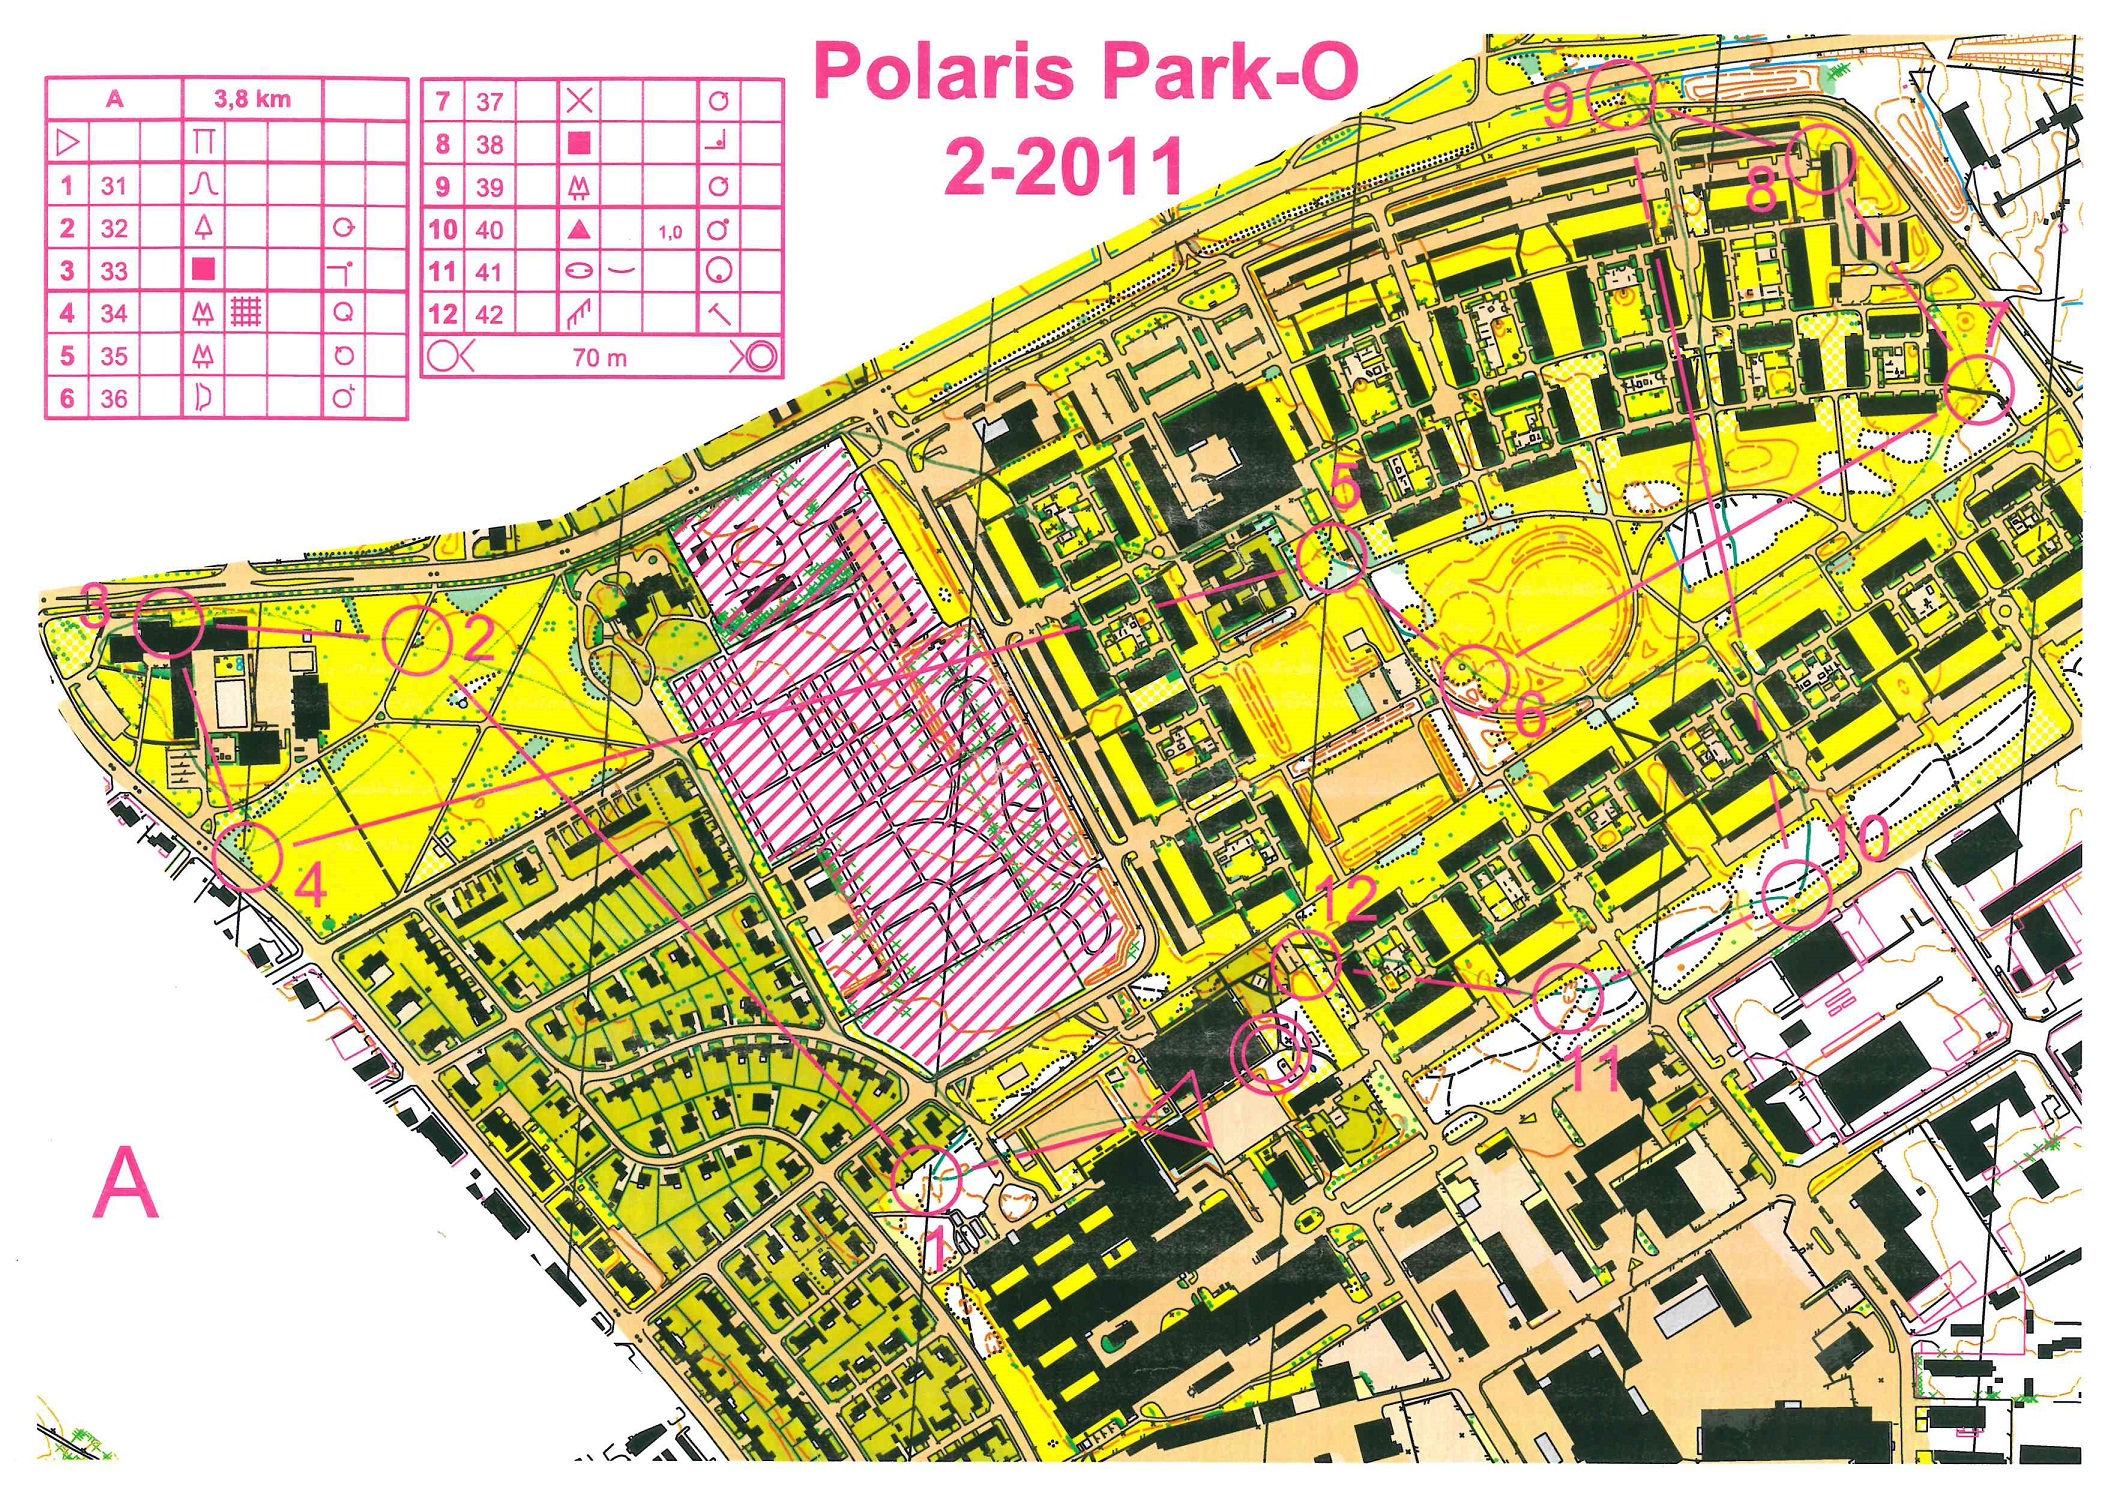 Polaris Sprint Cup (27/04/2011)